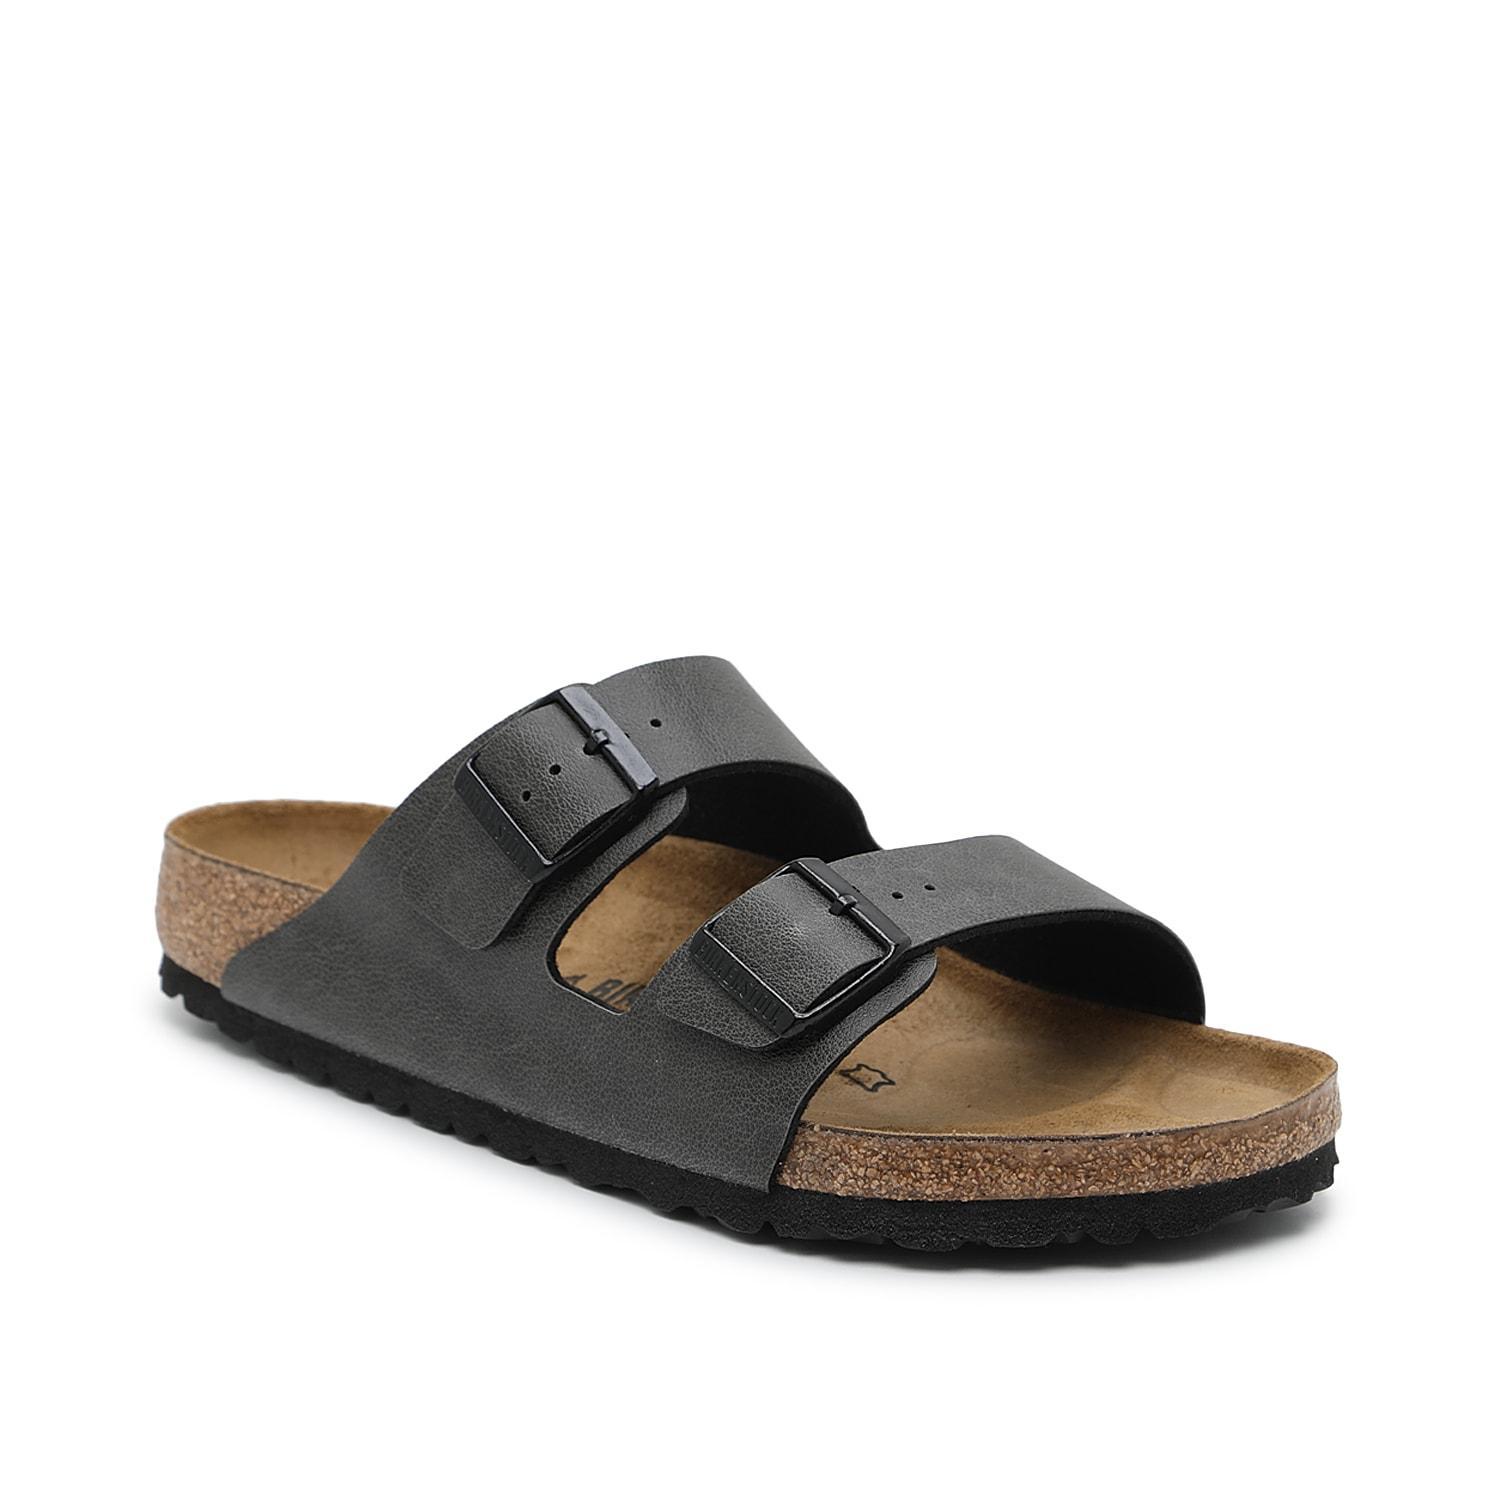 Birkenstock Arizona Slide Sandal Product Image